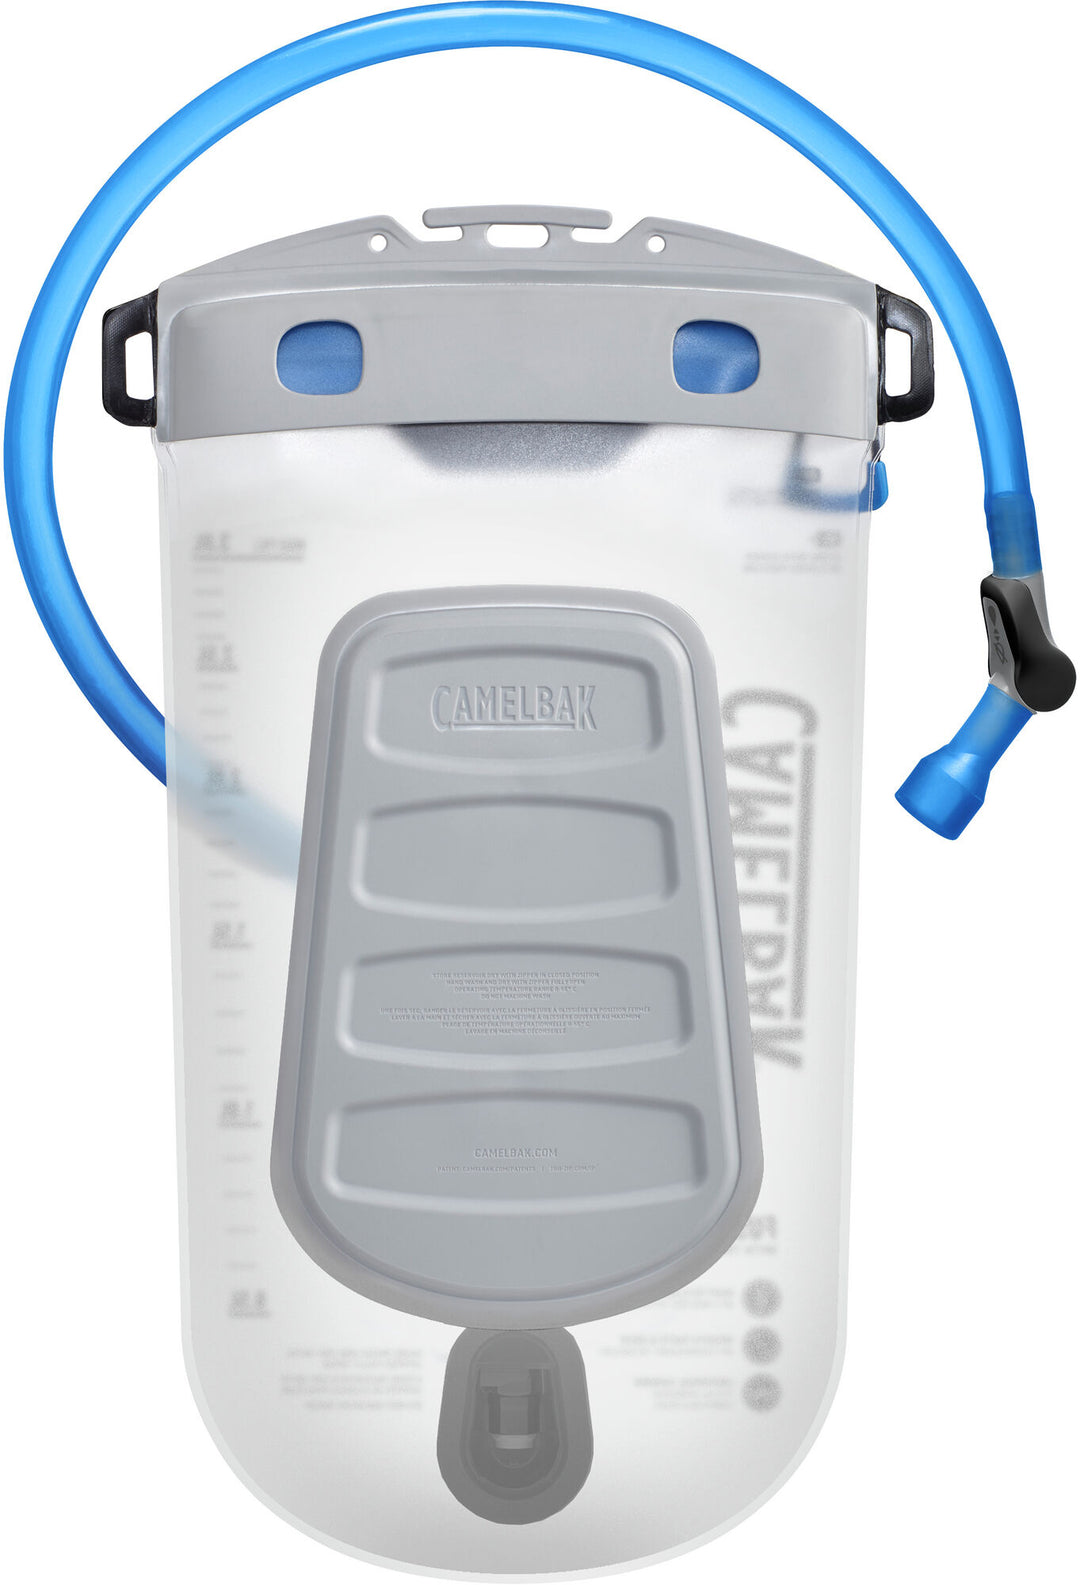 Camelbak Fusion 3L Reservoir with TRU Zip Waterproof Zipper（キャメルバック フュージョンリザーバー 3.0リットル）